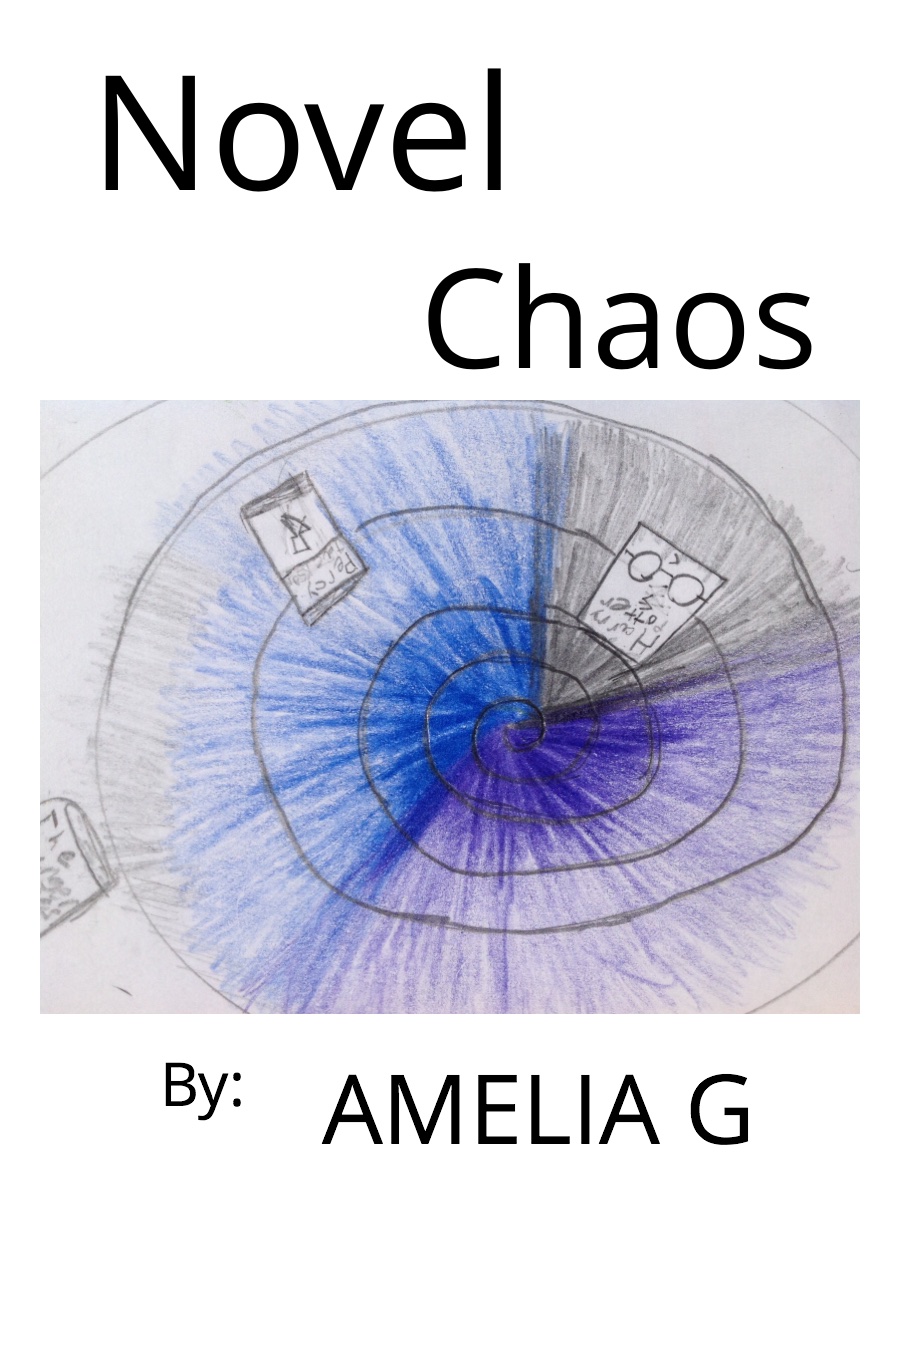 Novel Chaos by Amelia G